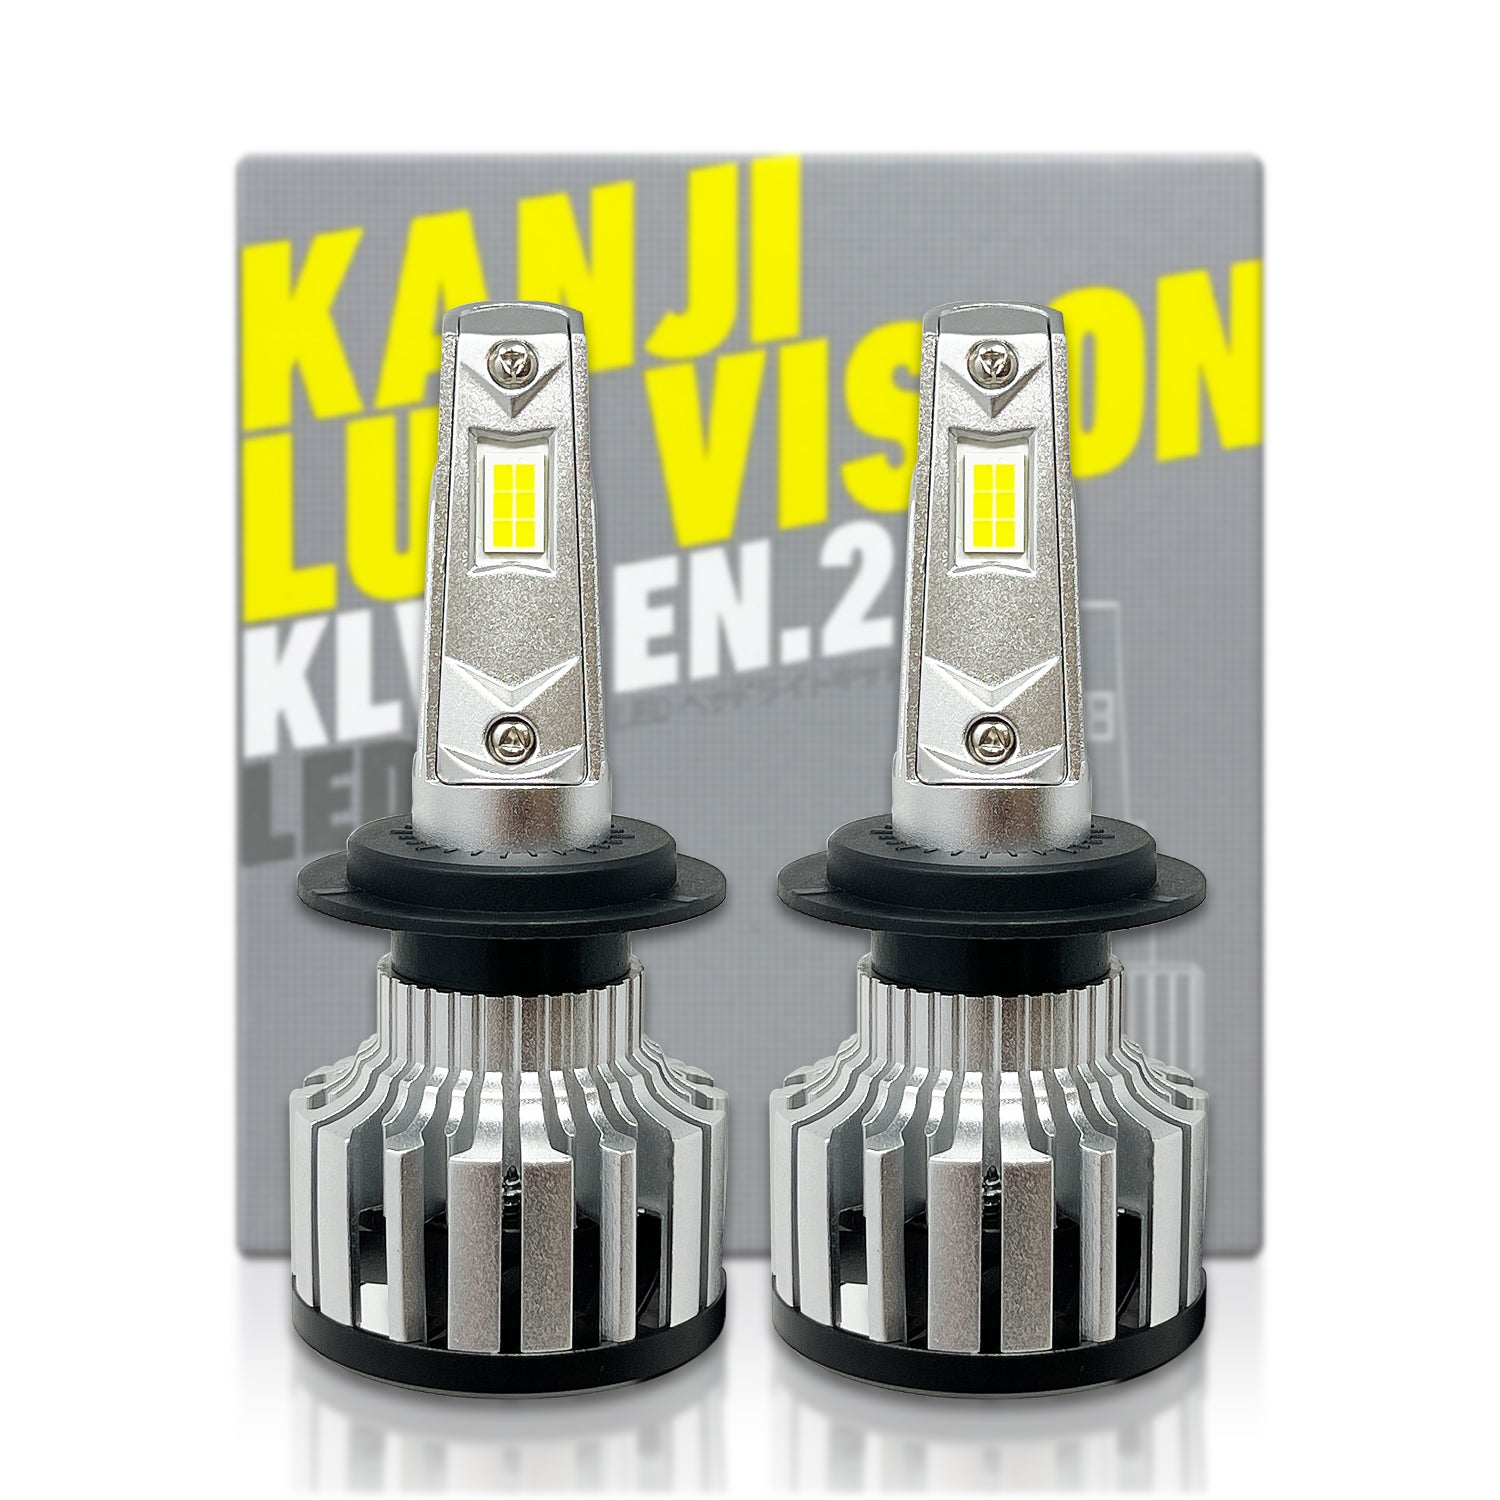 New! Authentic Philips Racing Vision H7 +150% 12972RVS2 Halogen Headlight  bulbs 